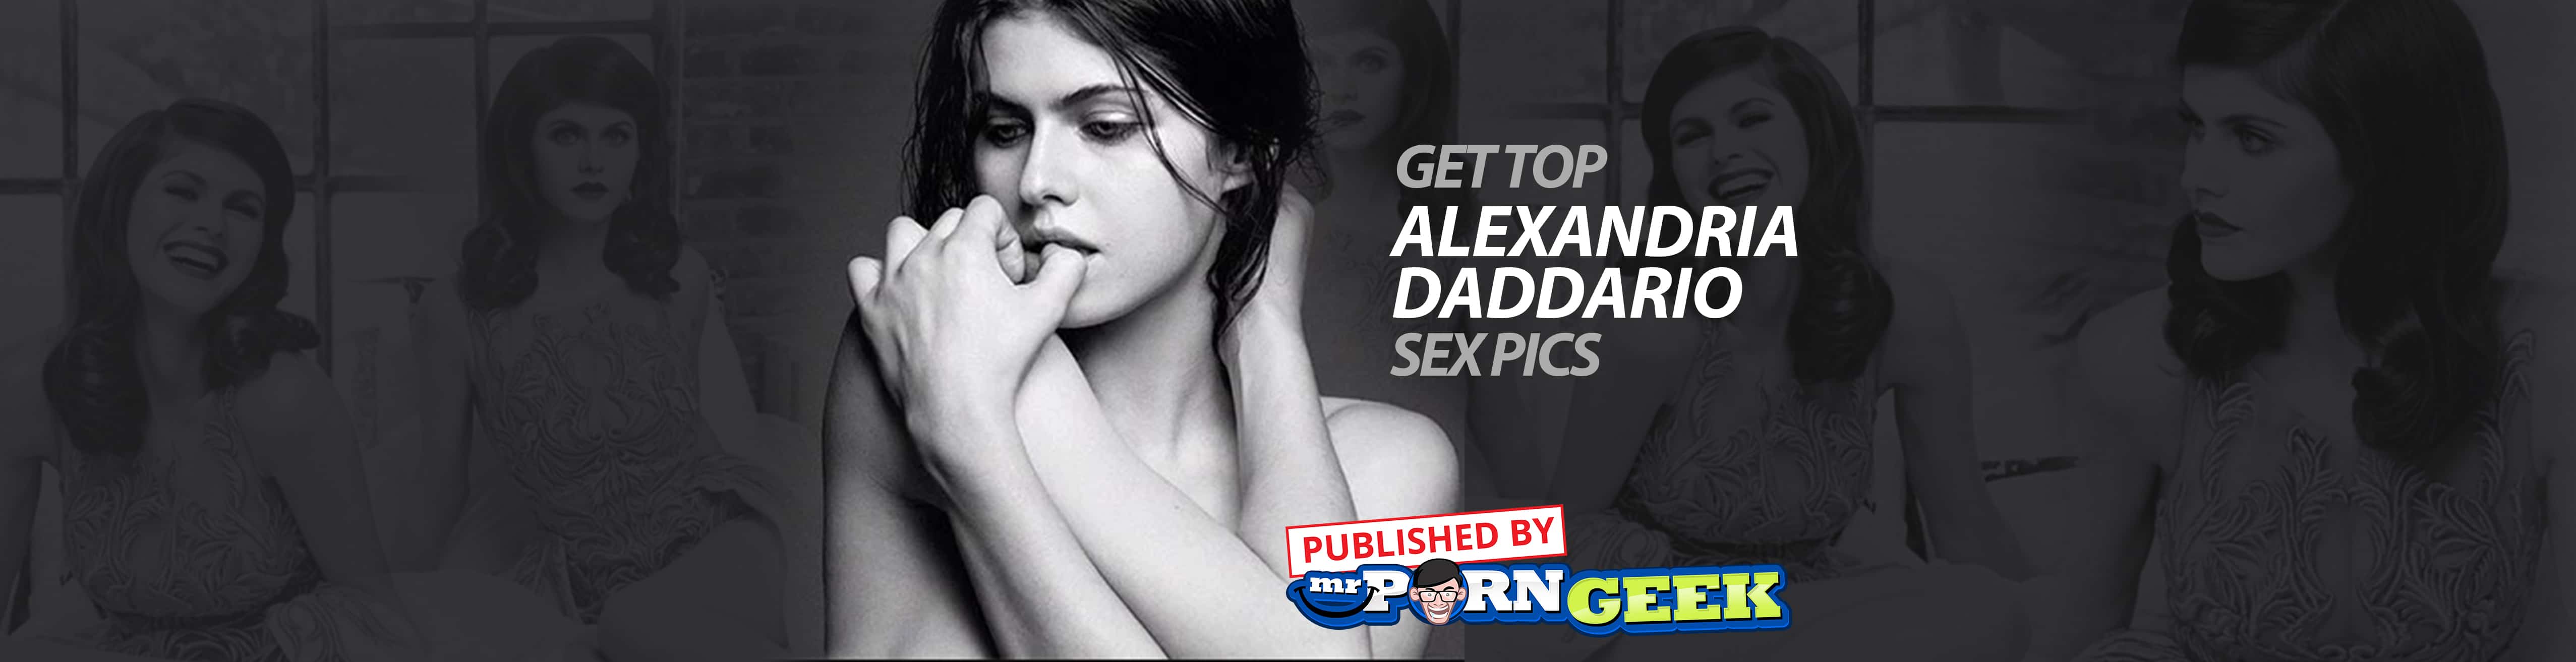 Suspense Sex Video - Get Top Alexandria Daddario Nudes - Sex Pics And Naked Videos